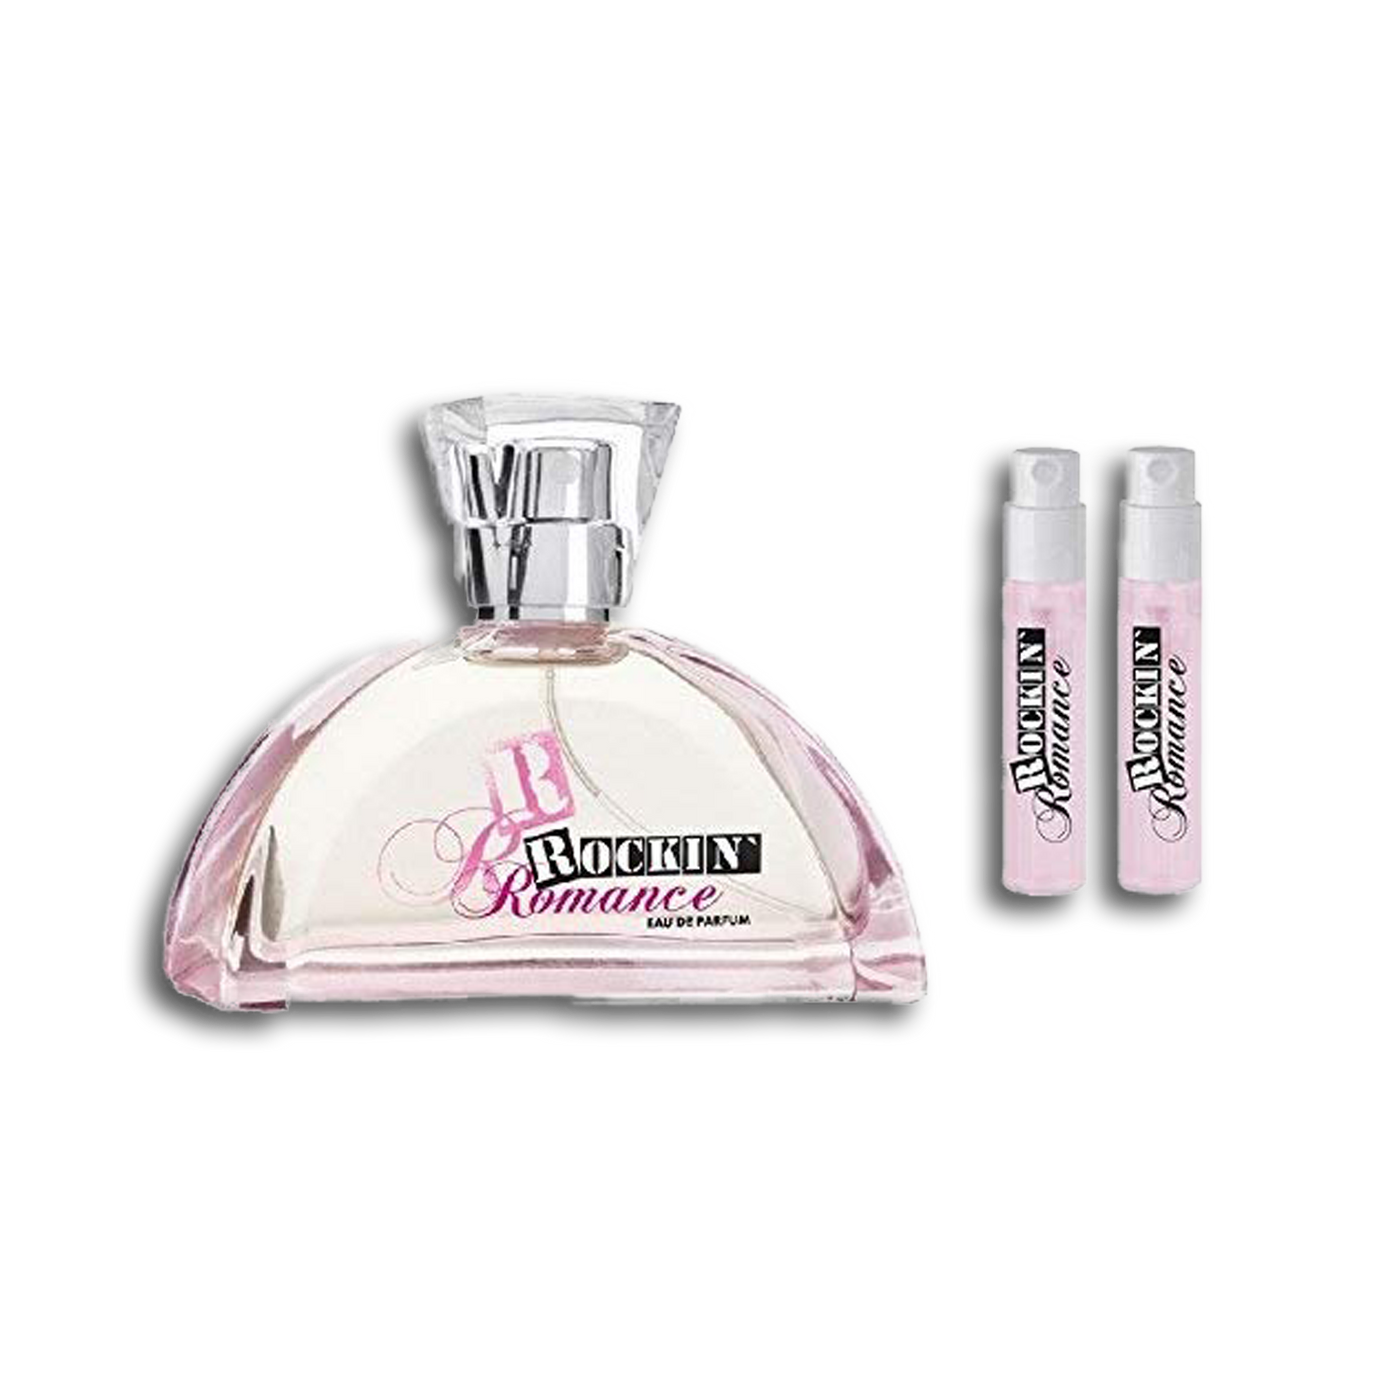 LR Rockin' Romance Eau de Parfum 50 ml + 2 x Vapos Rockin Romance